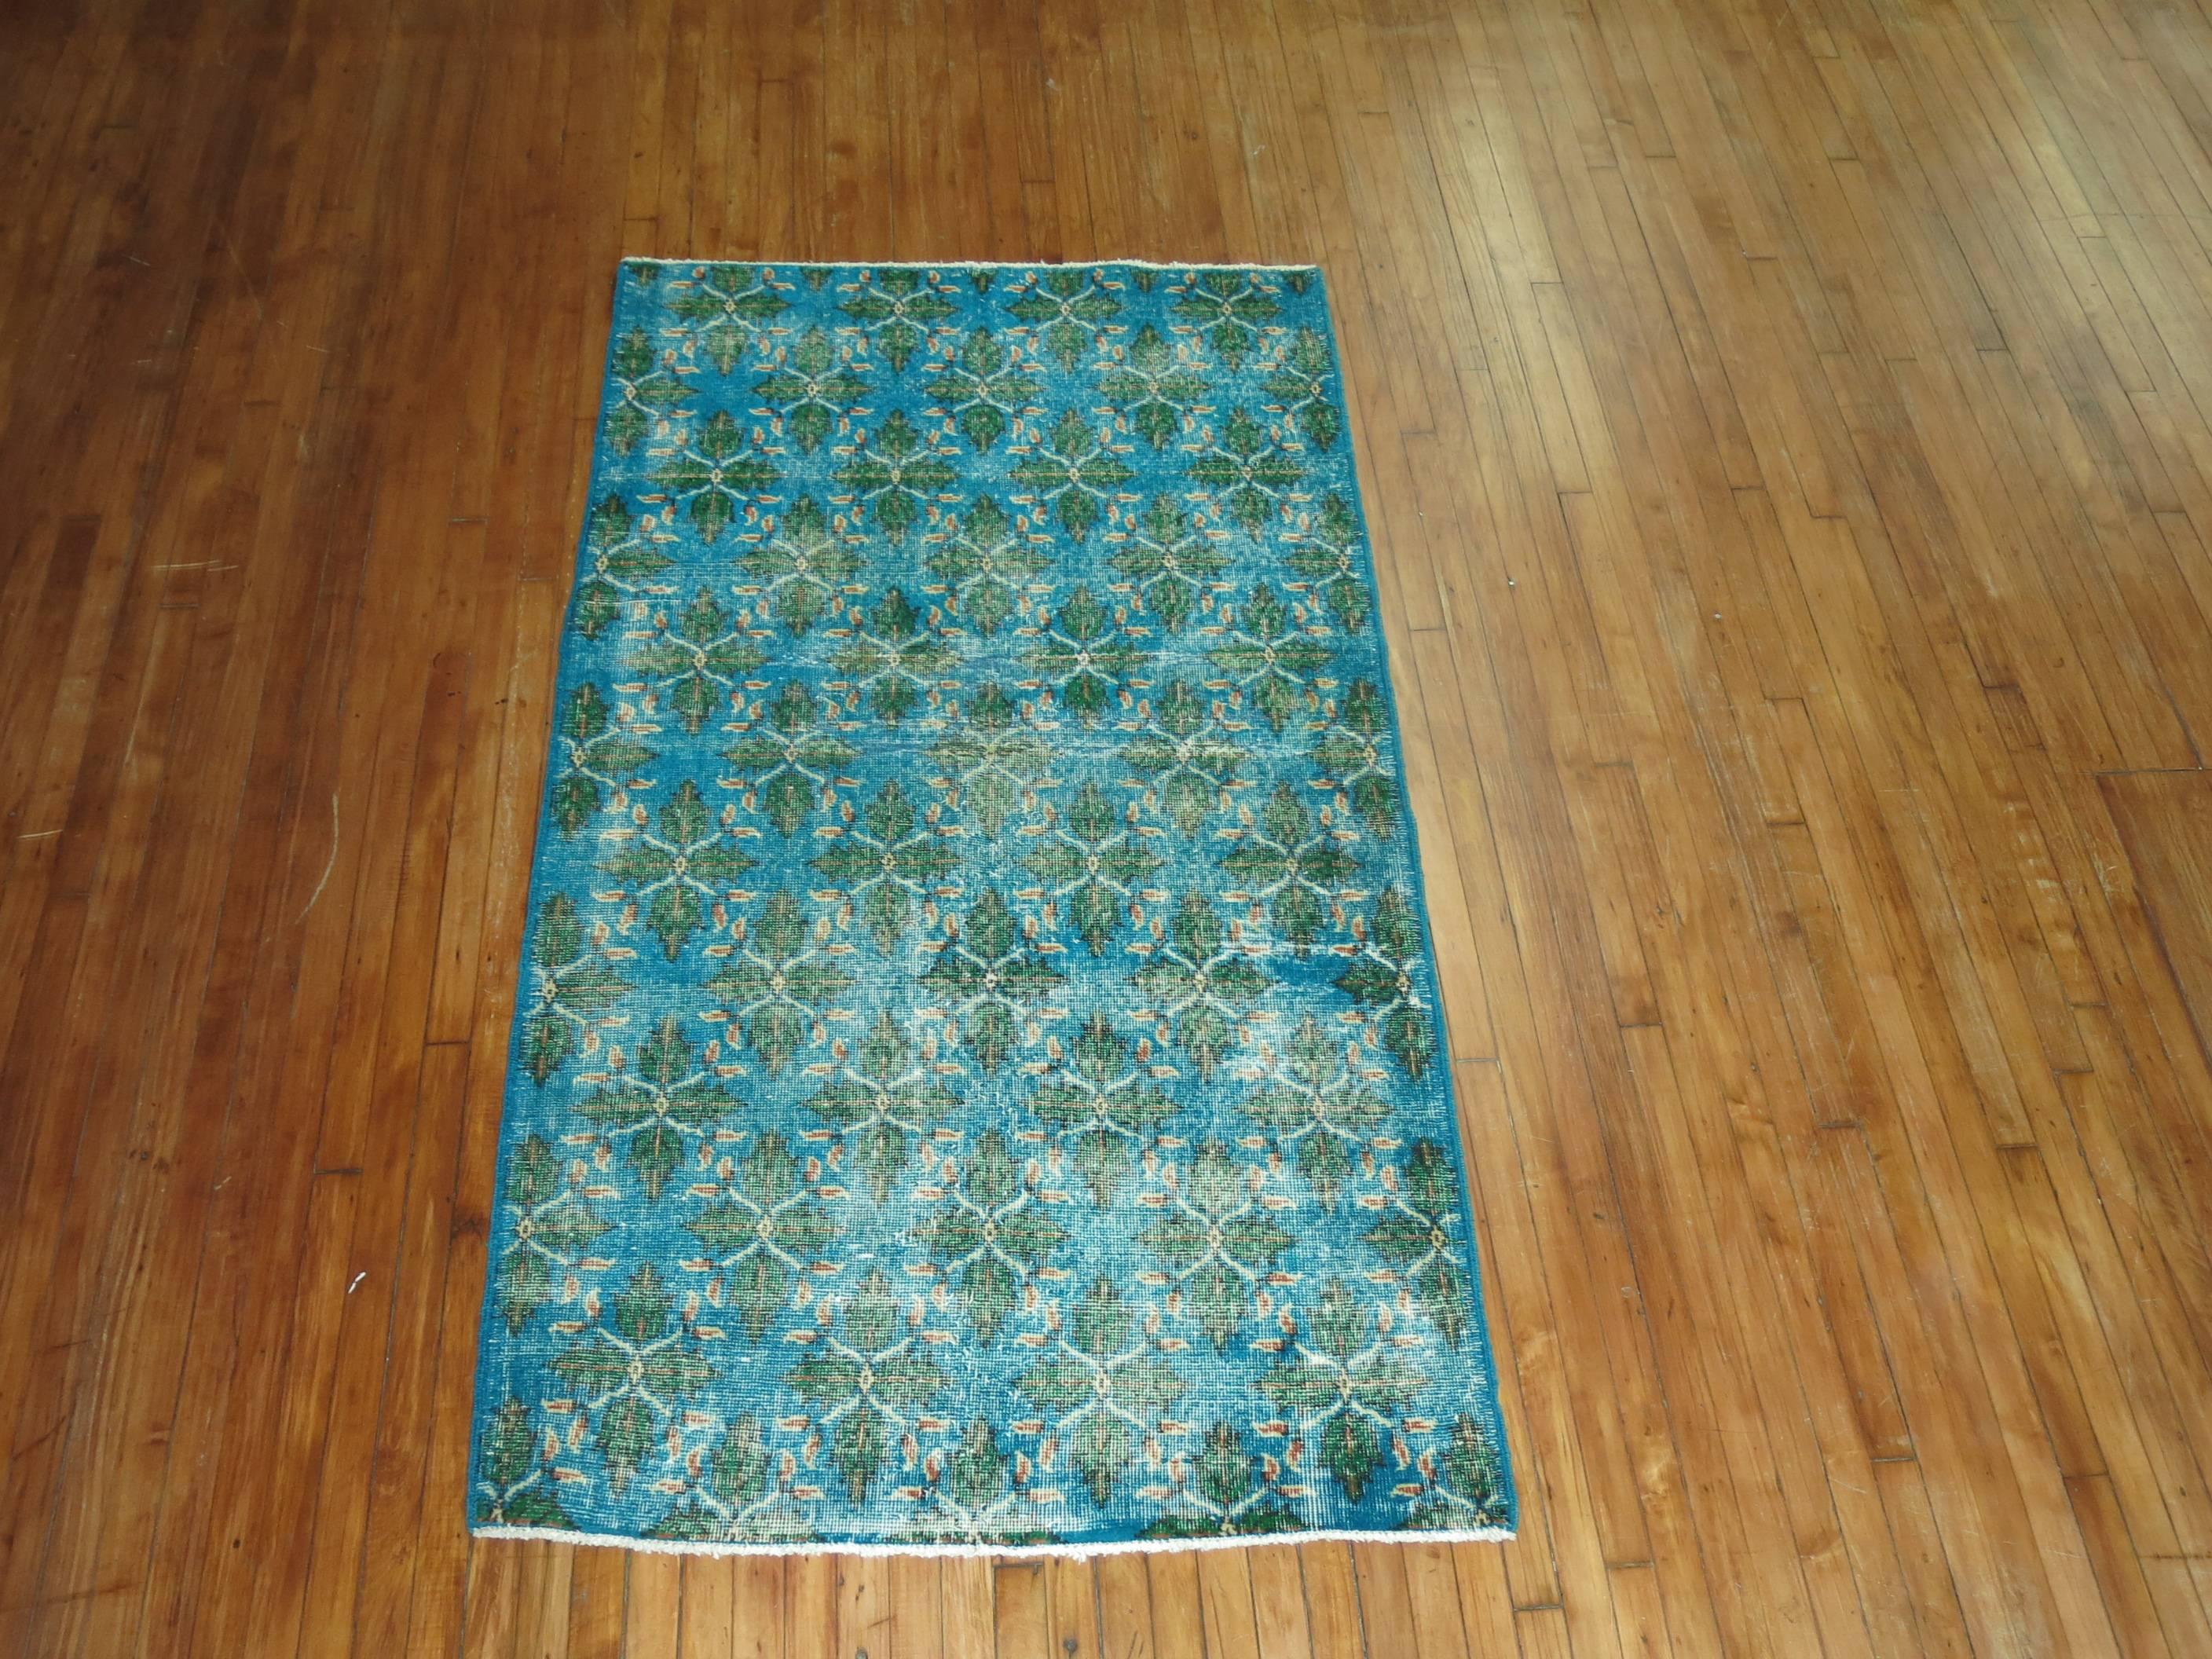 Worn Mid-Century Turkish Konya rug in Caribbean blue and green.